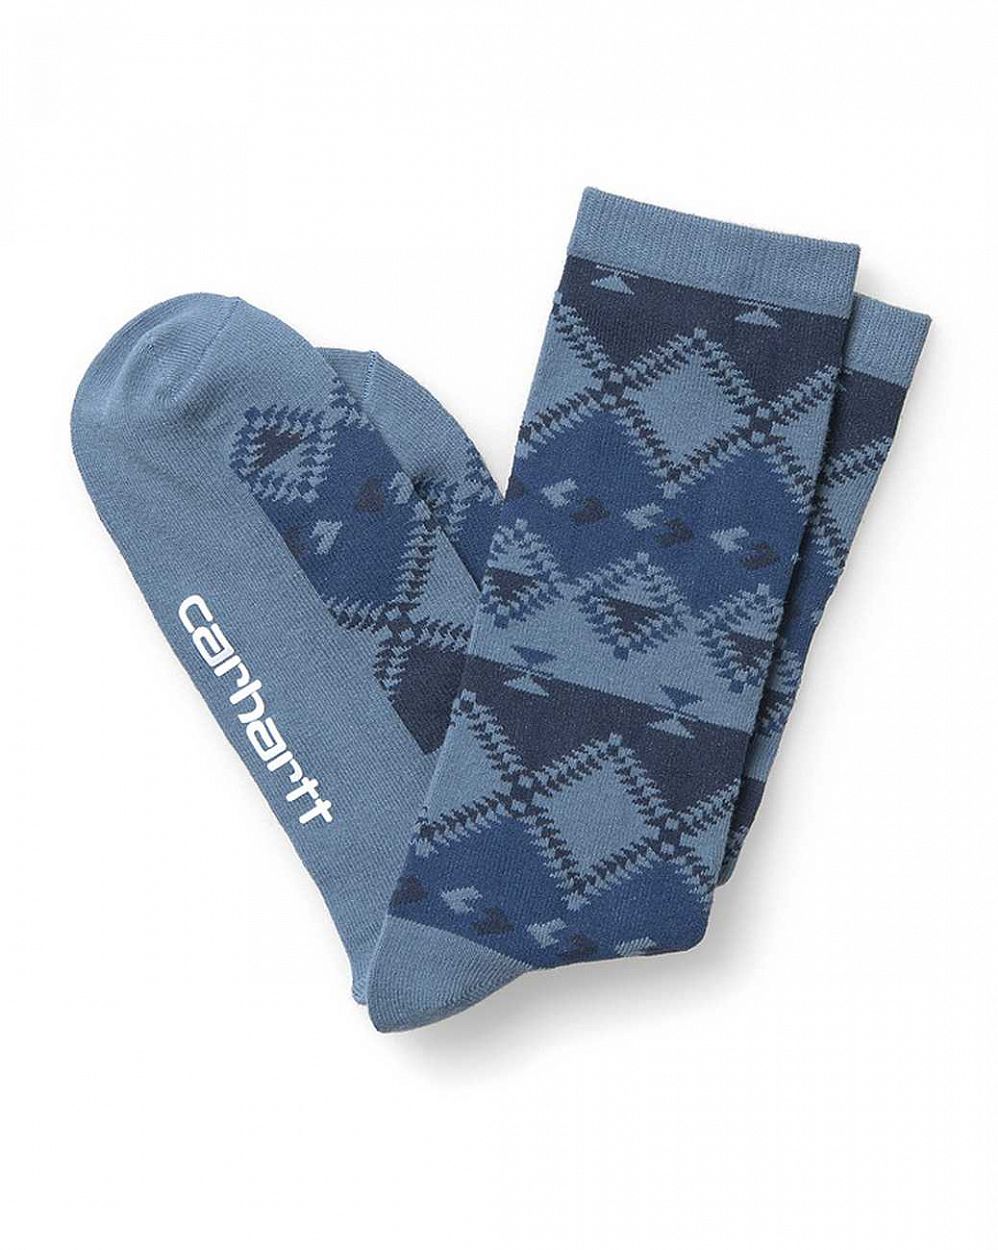 Носки Carhartt WIP Native Socks Navy отзывы